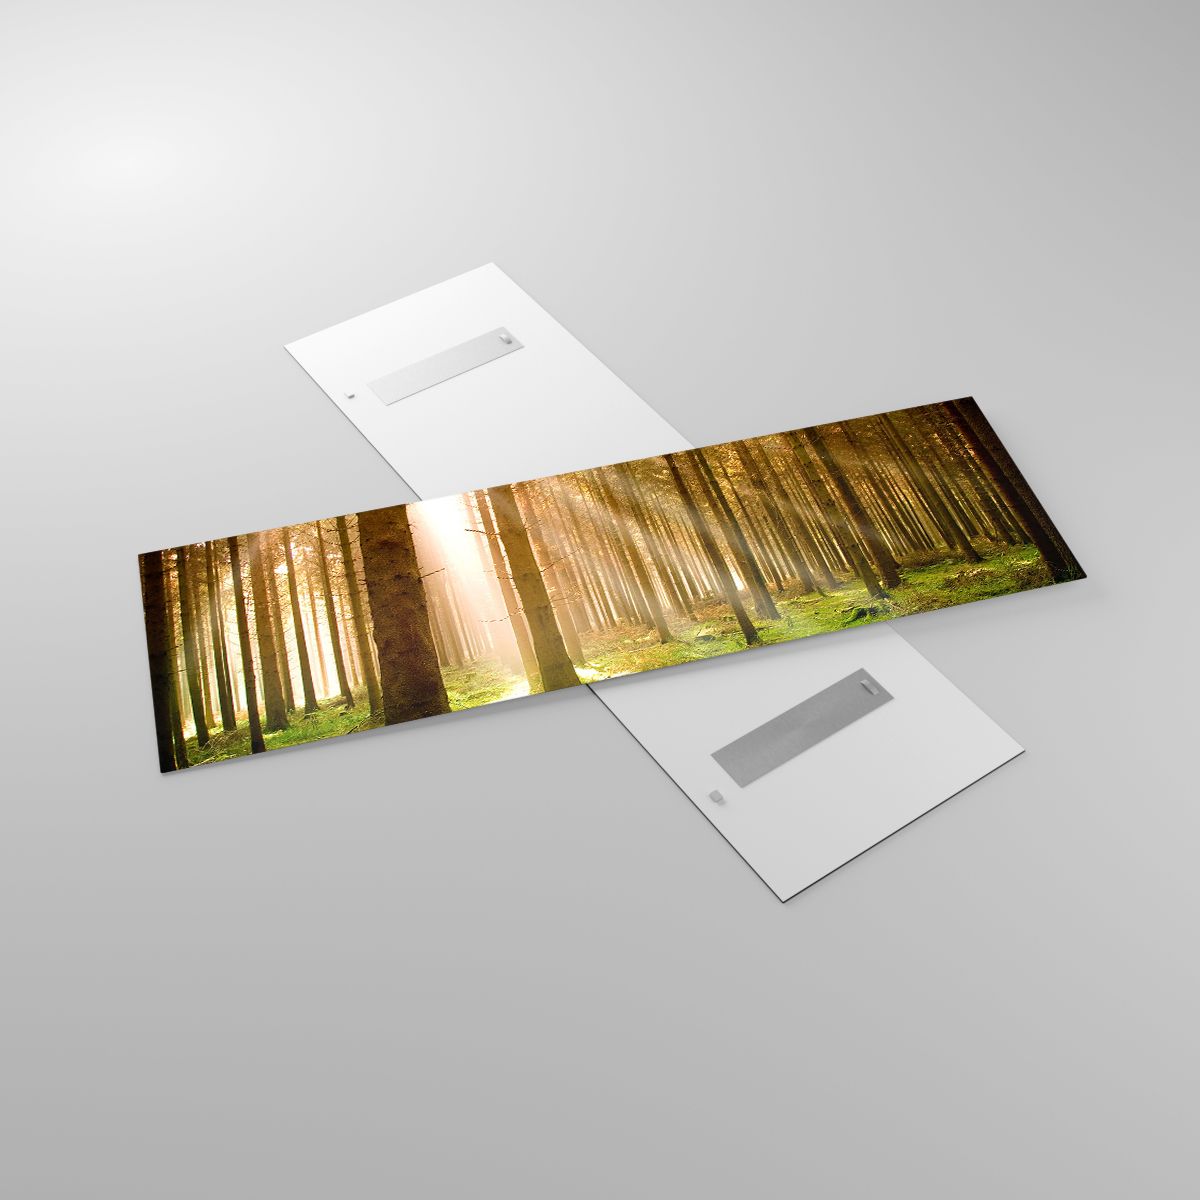 Glasbild Wald, Glasbild Sonnenstrahlen, Glasbild Natur, Glasbild Landschaft, Glasbild Landschaft